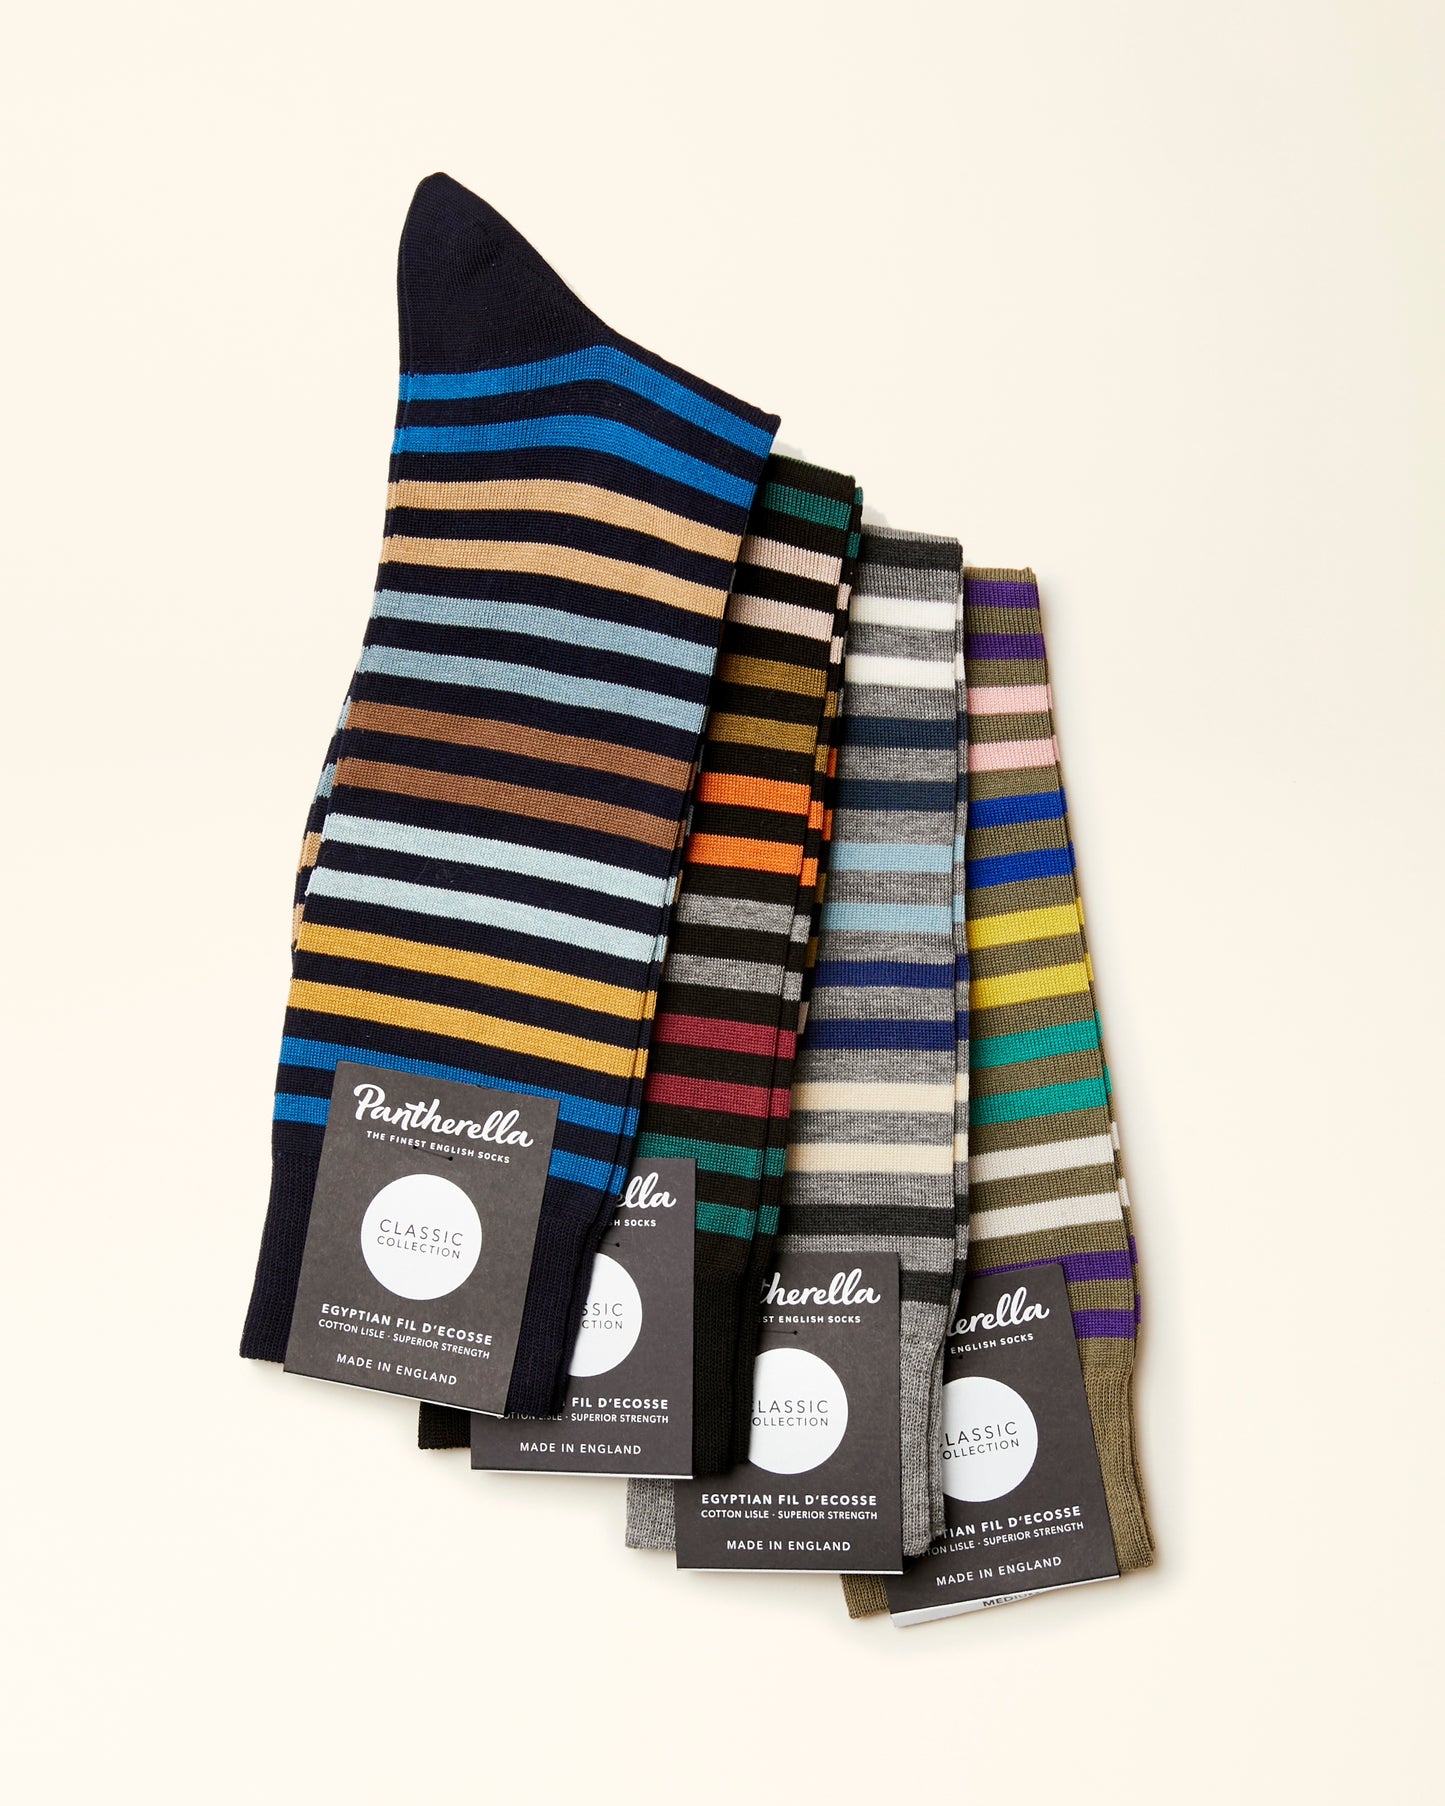 Classic Collection "Kilburn" Sock